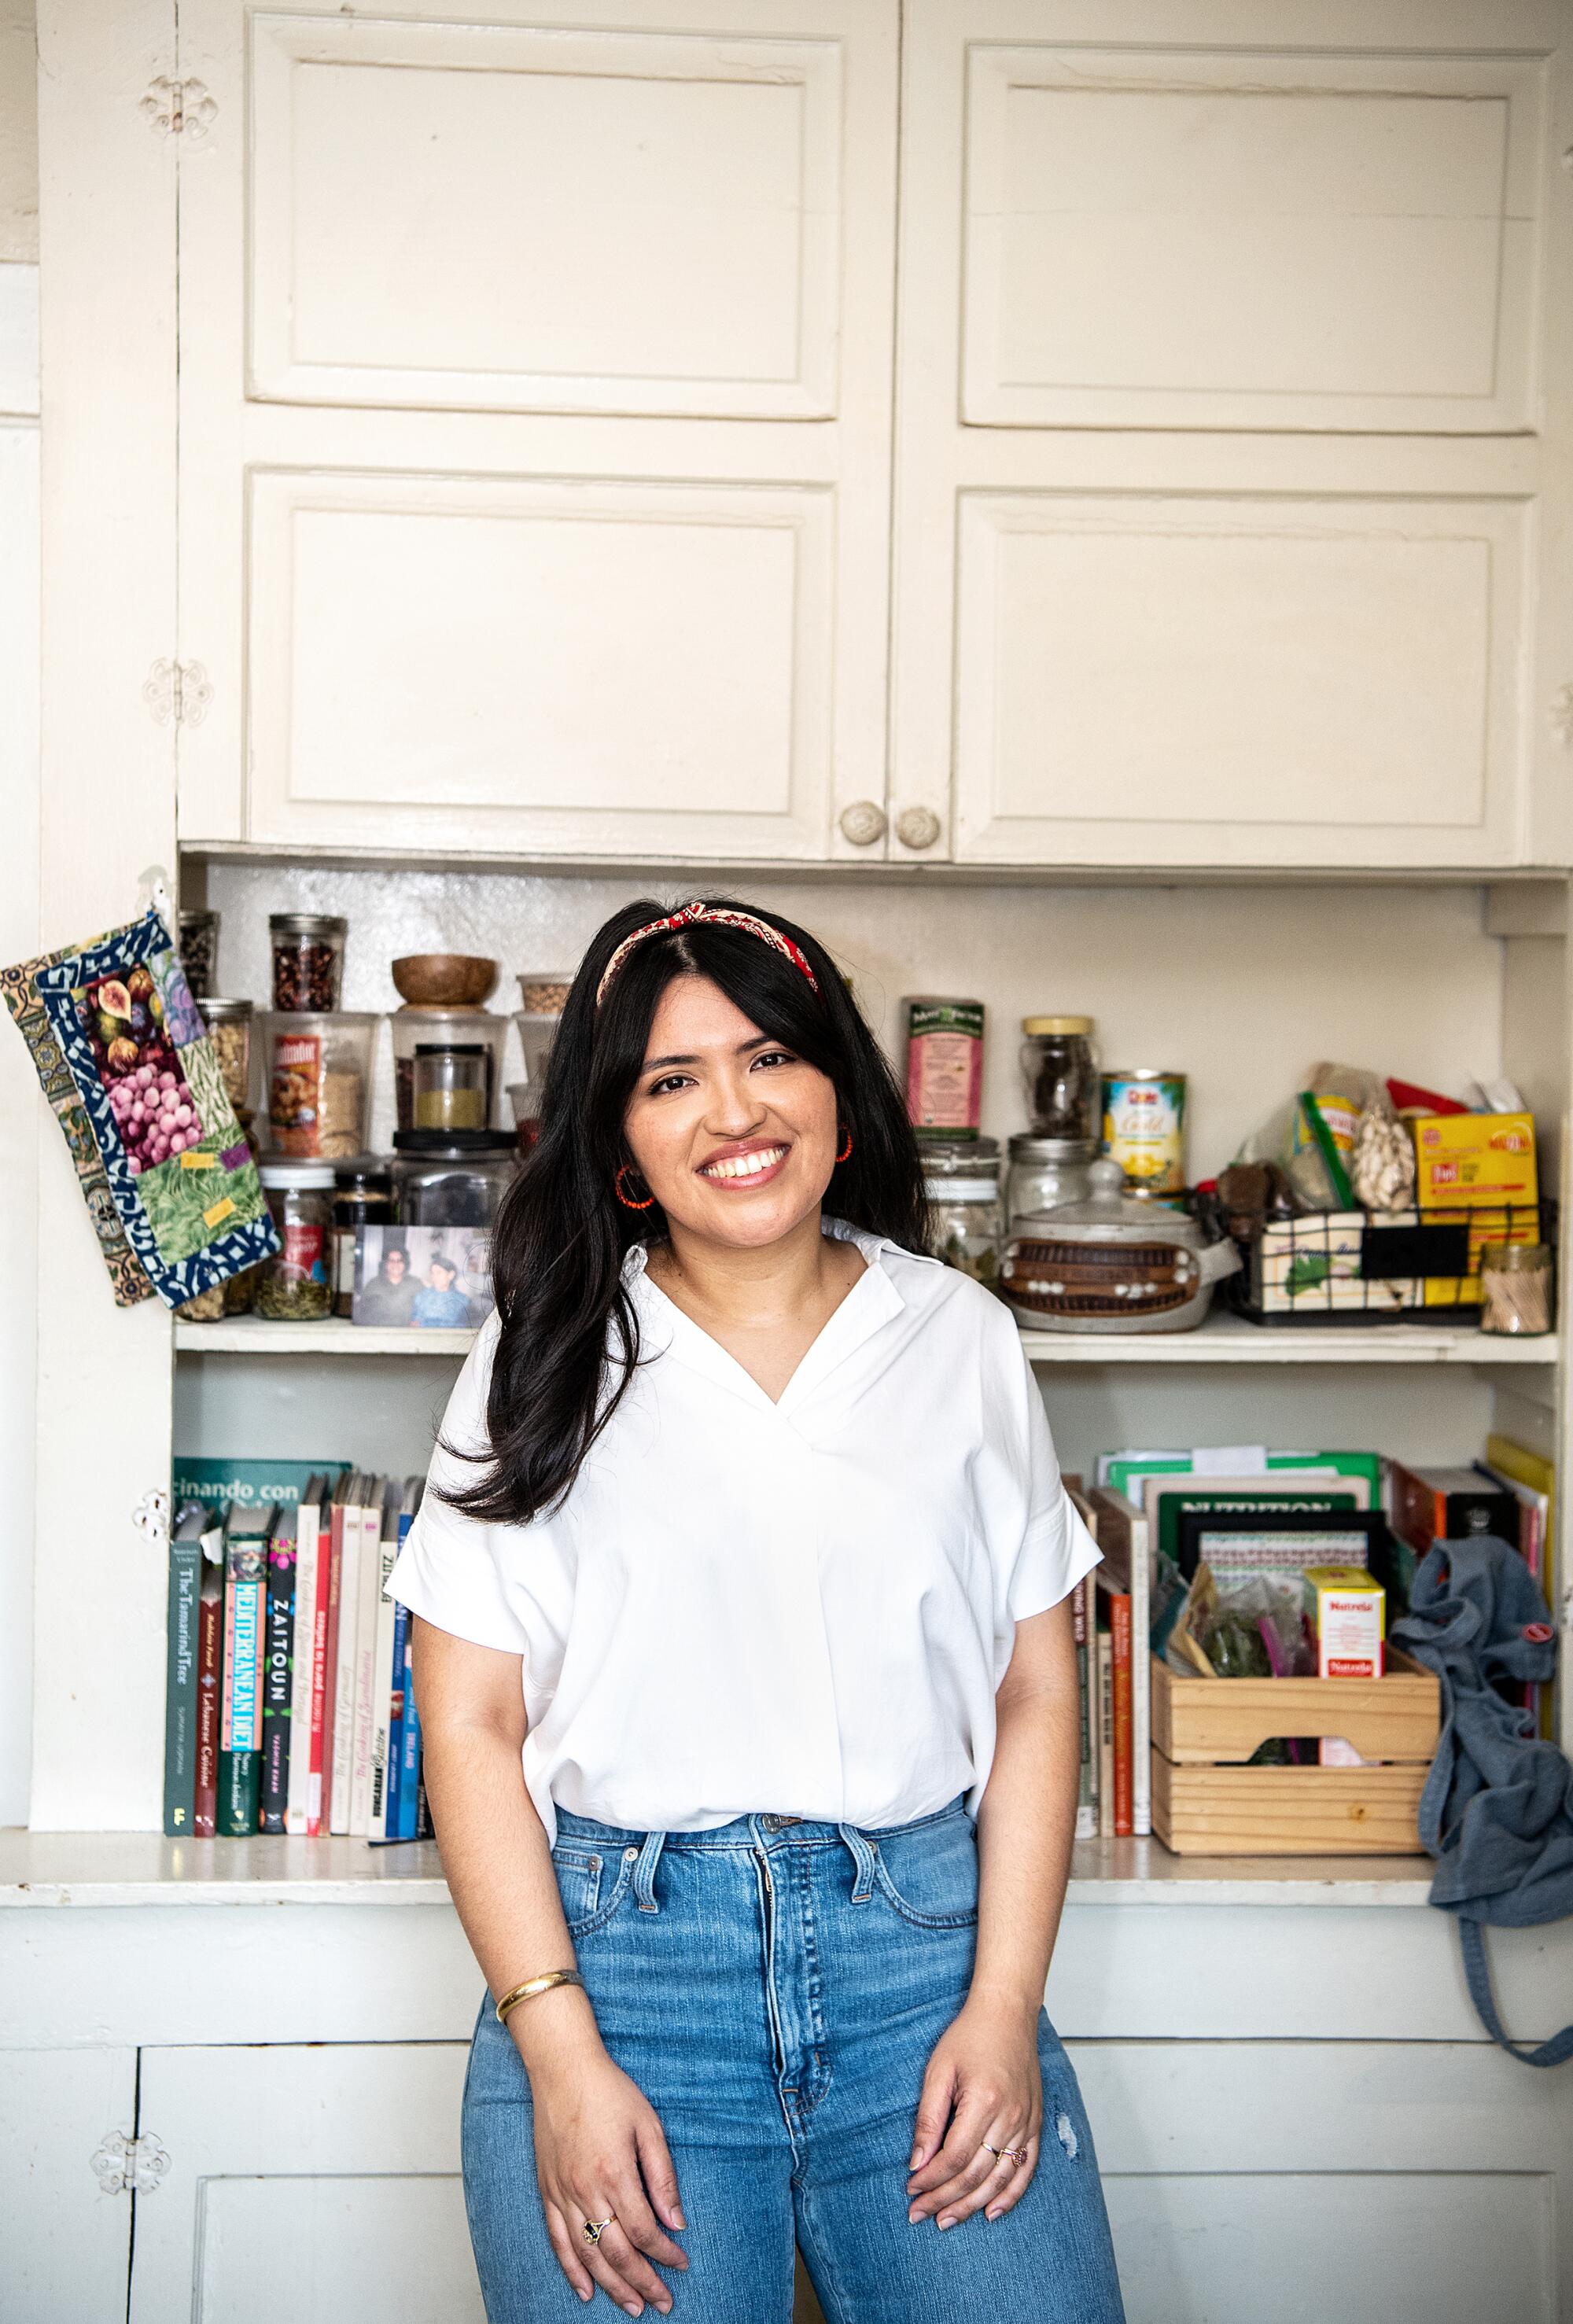  Food writer and online cooking instructor, Karla Vasquez, inside her kitchen